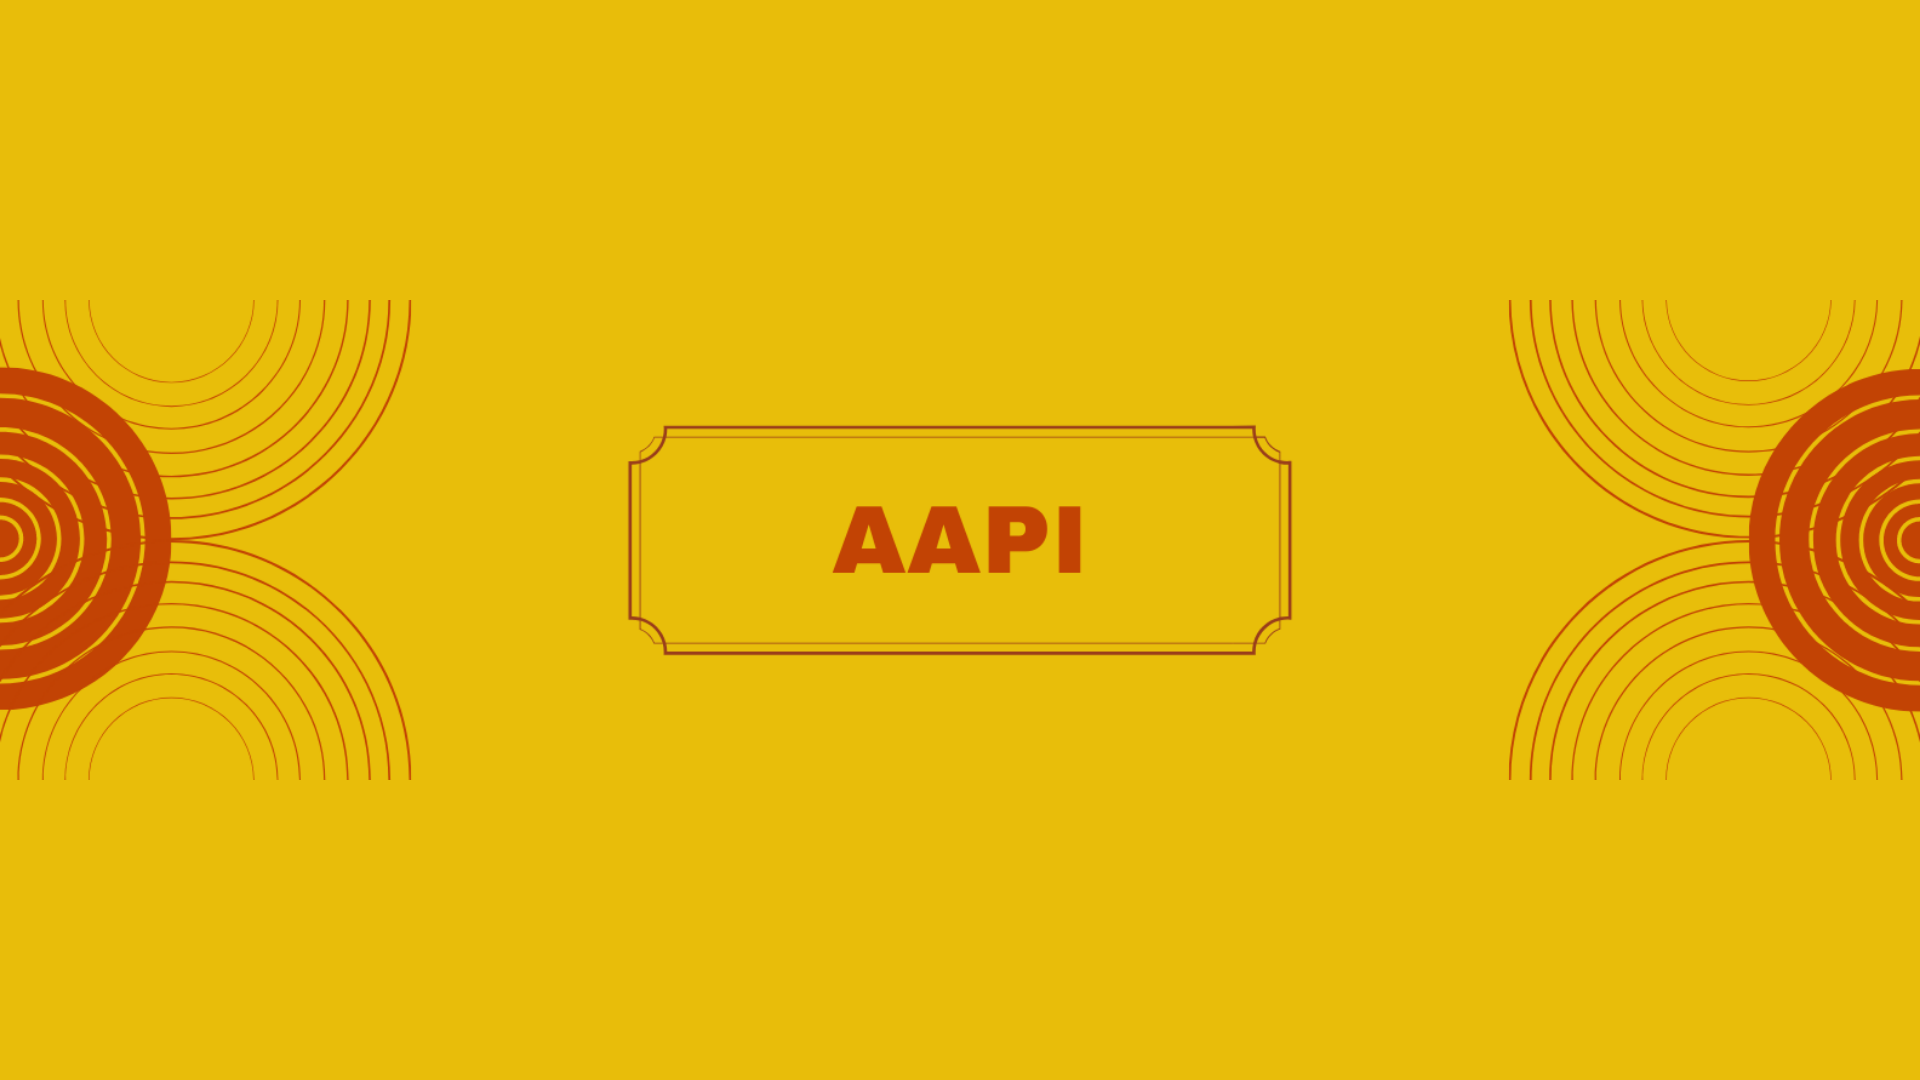 New Identity Initiative: AAPI